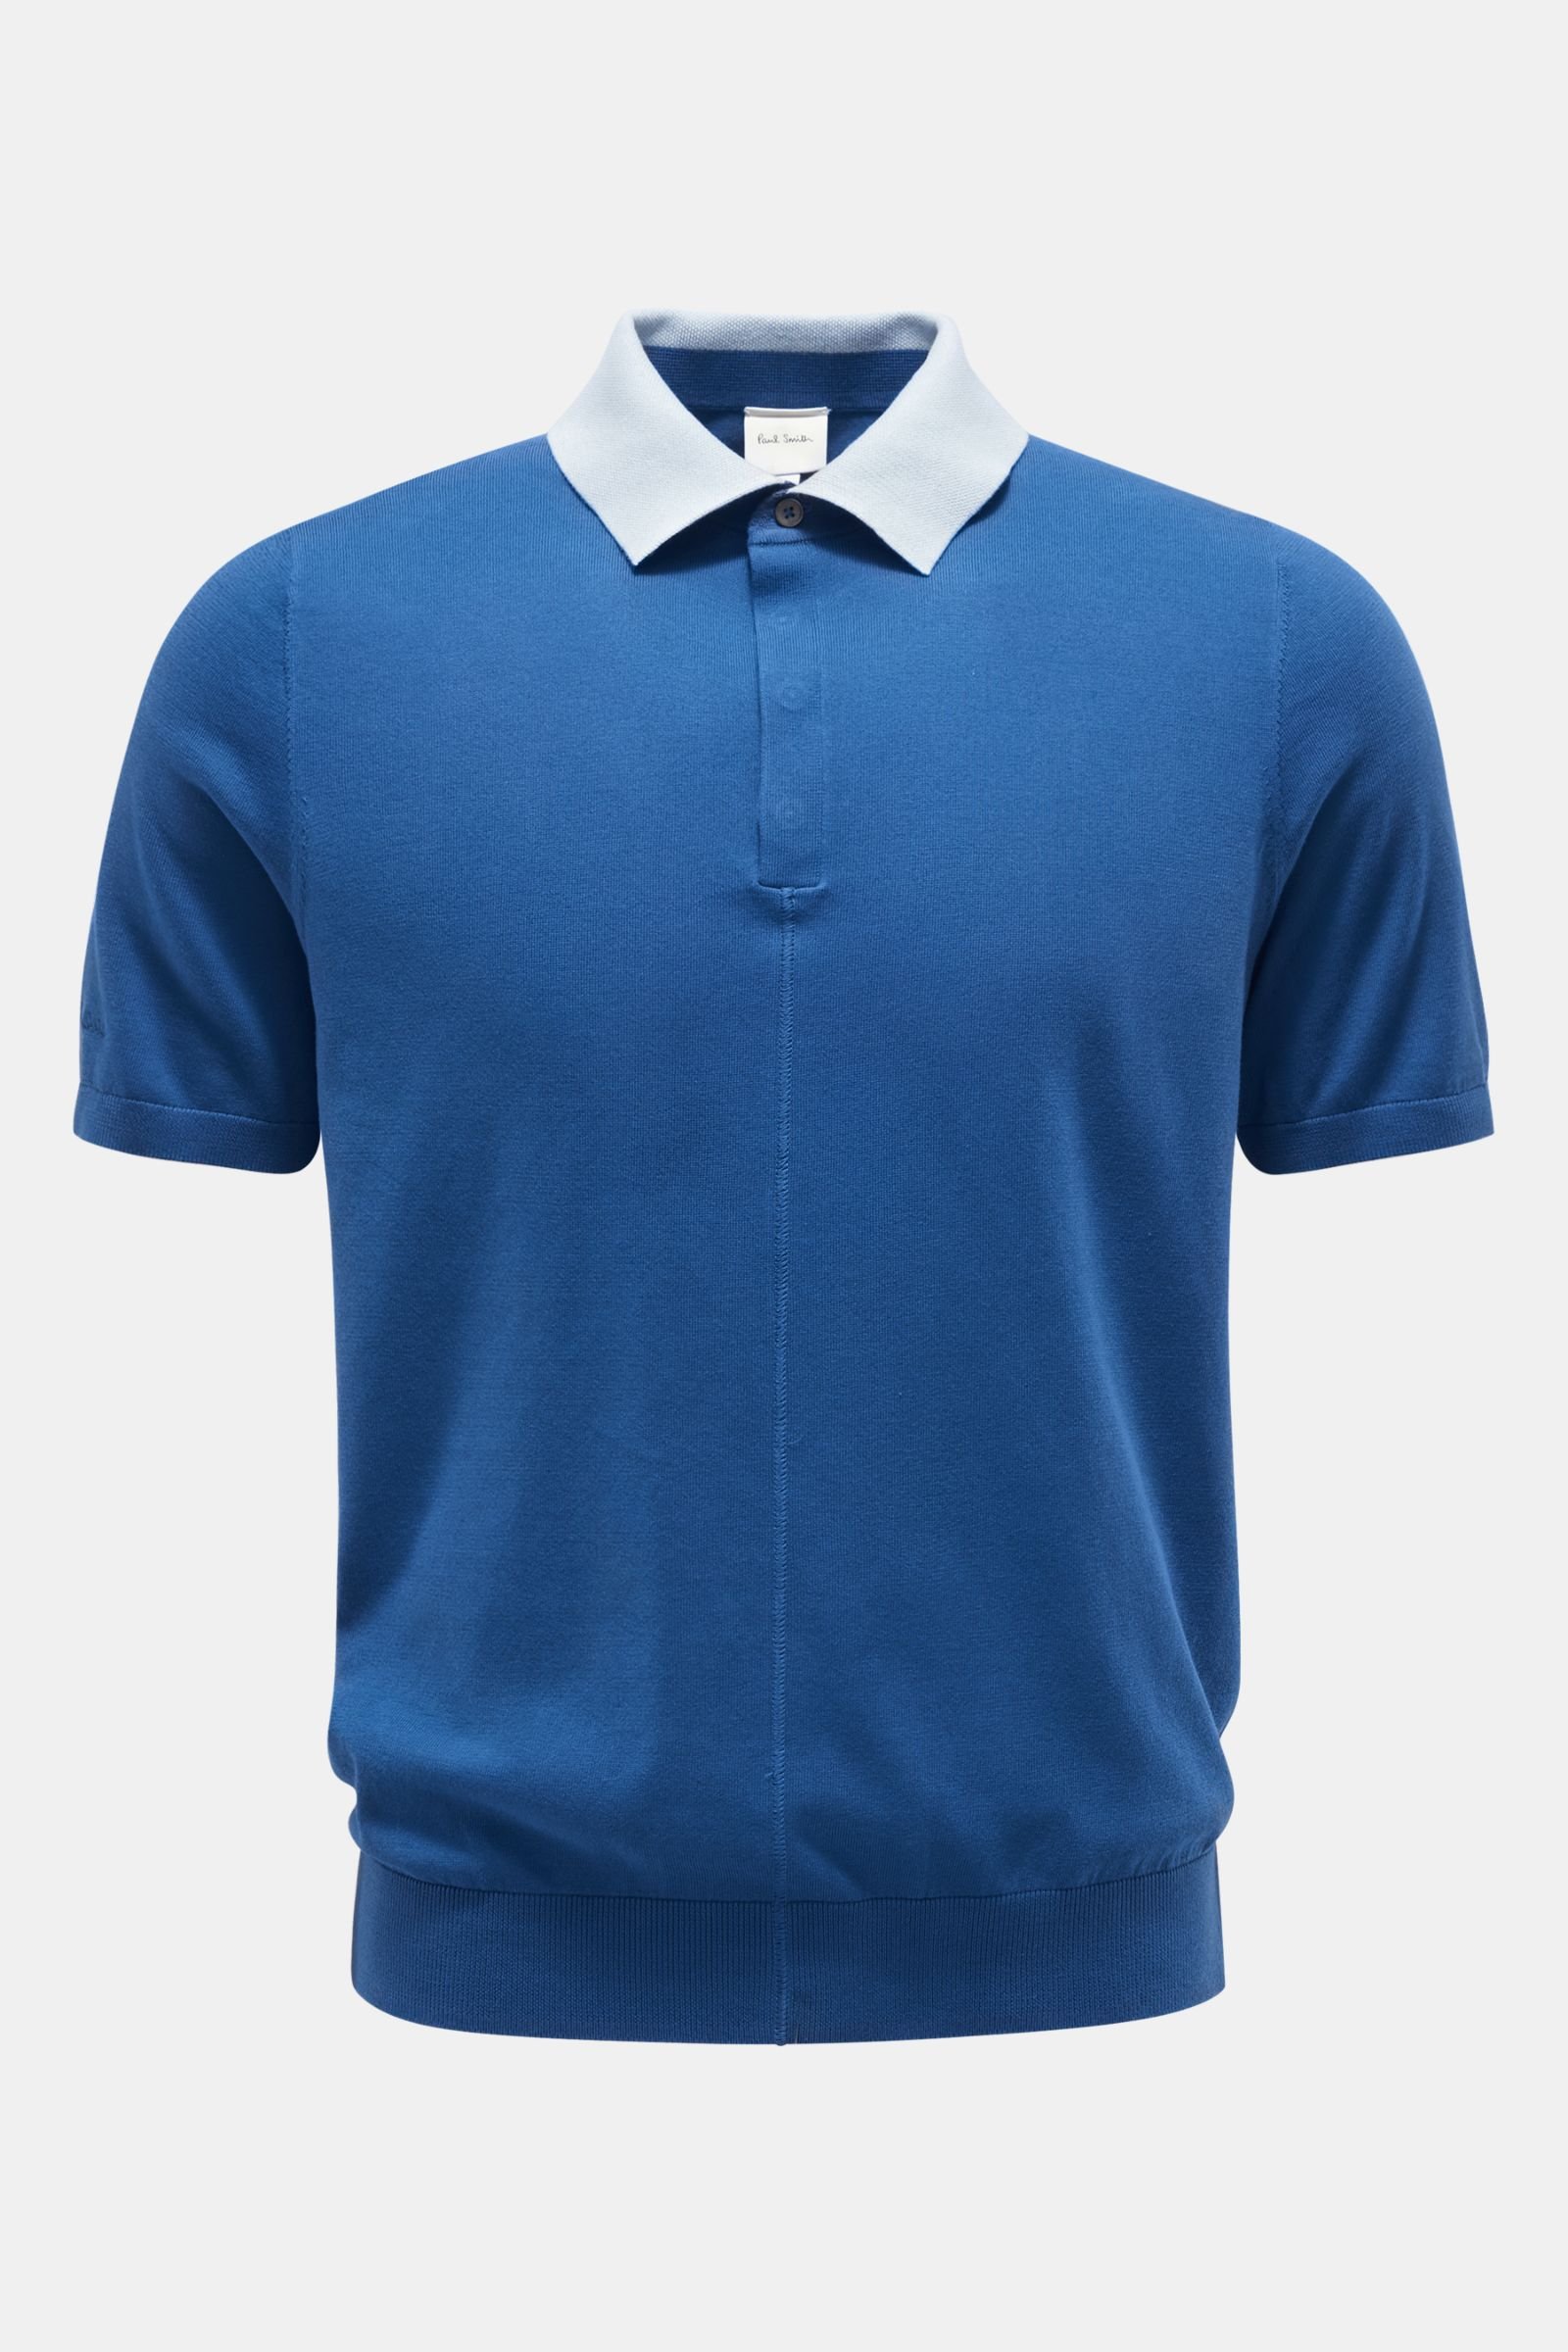 Short sleeve knit polo blue/pastel blue